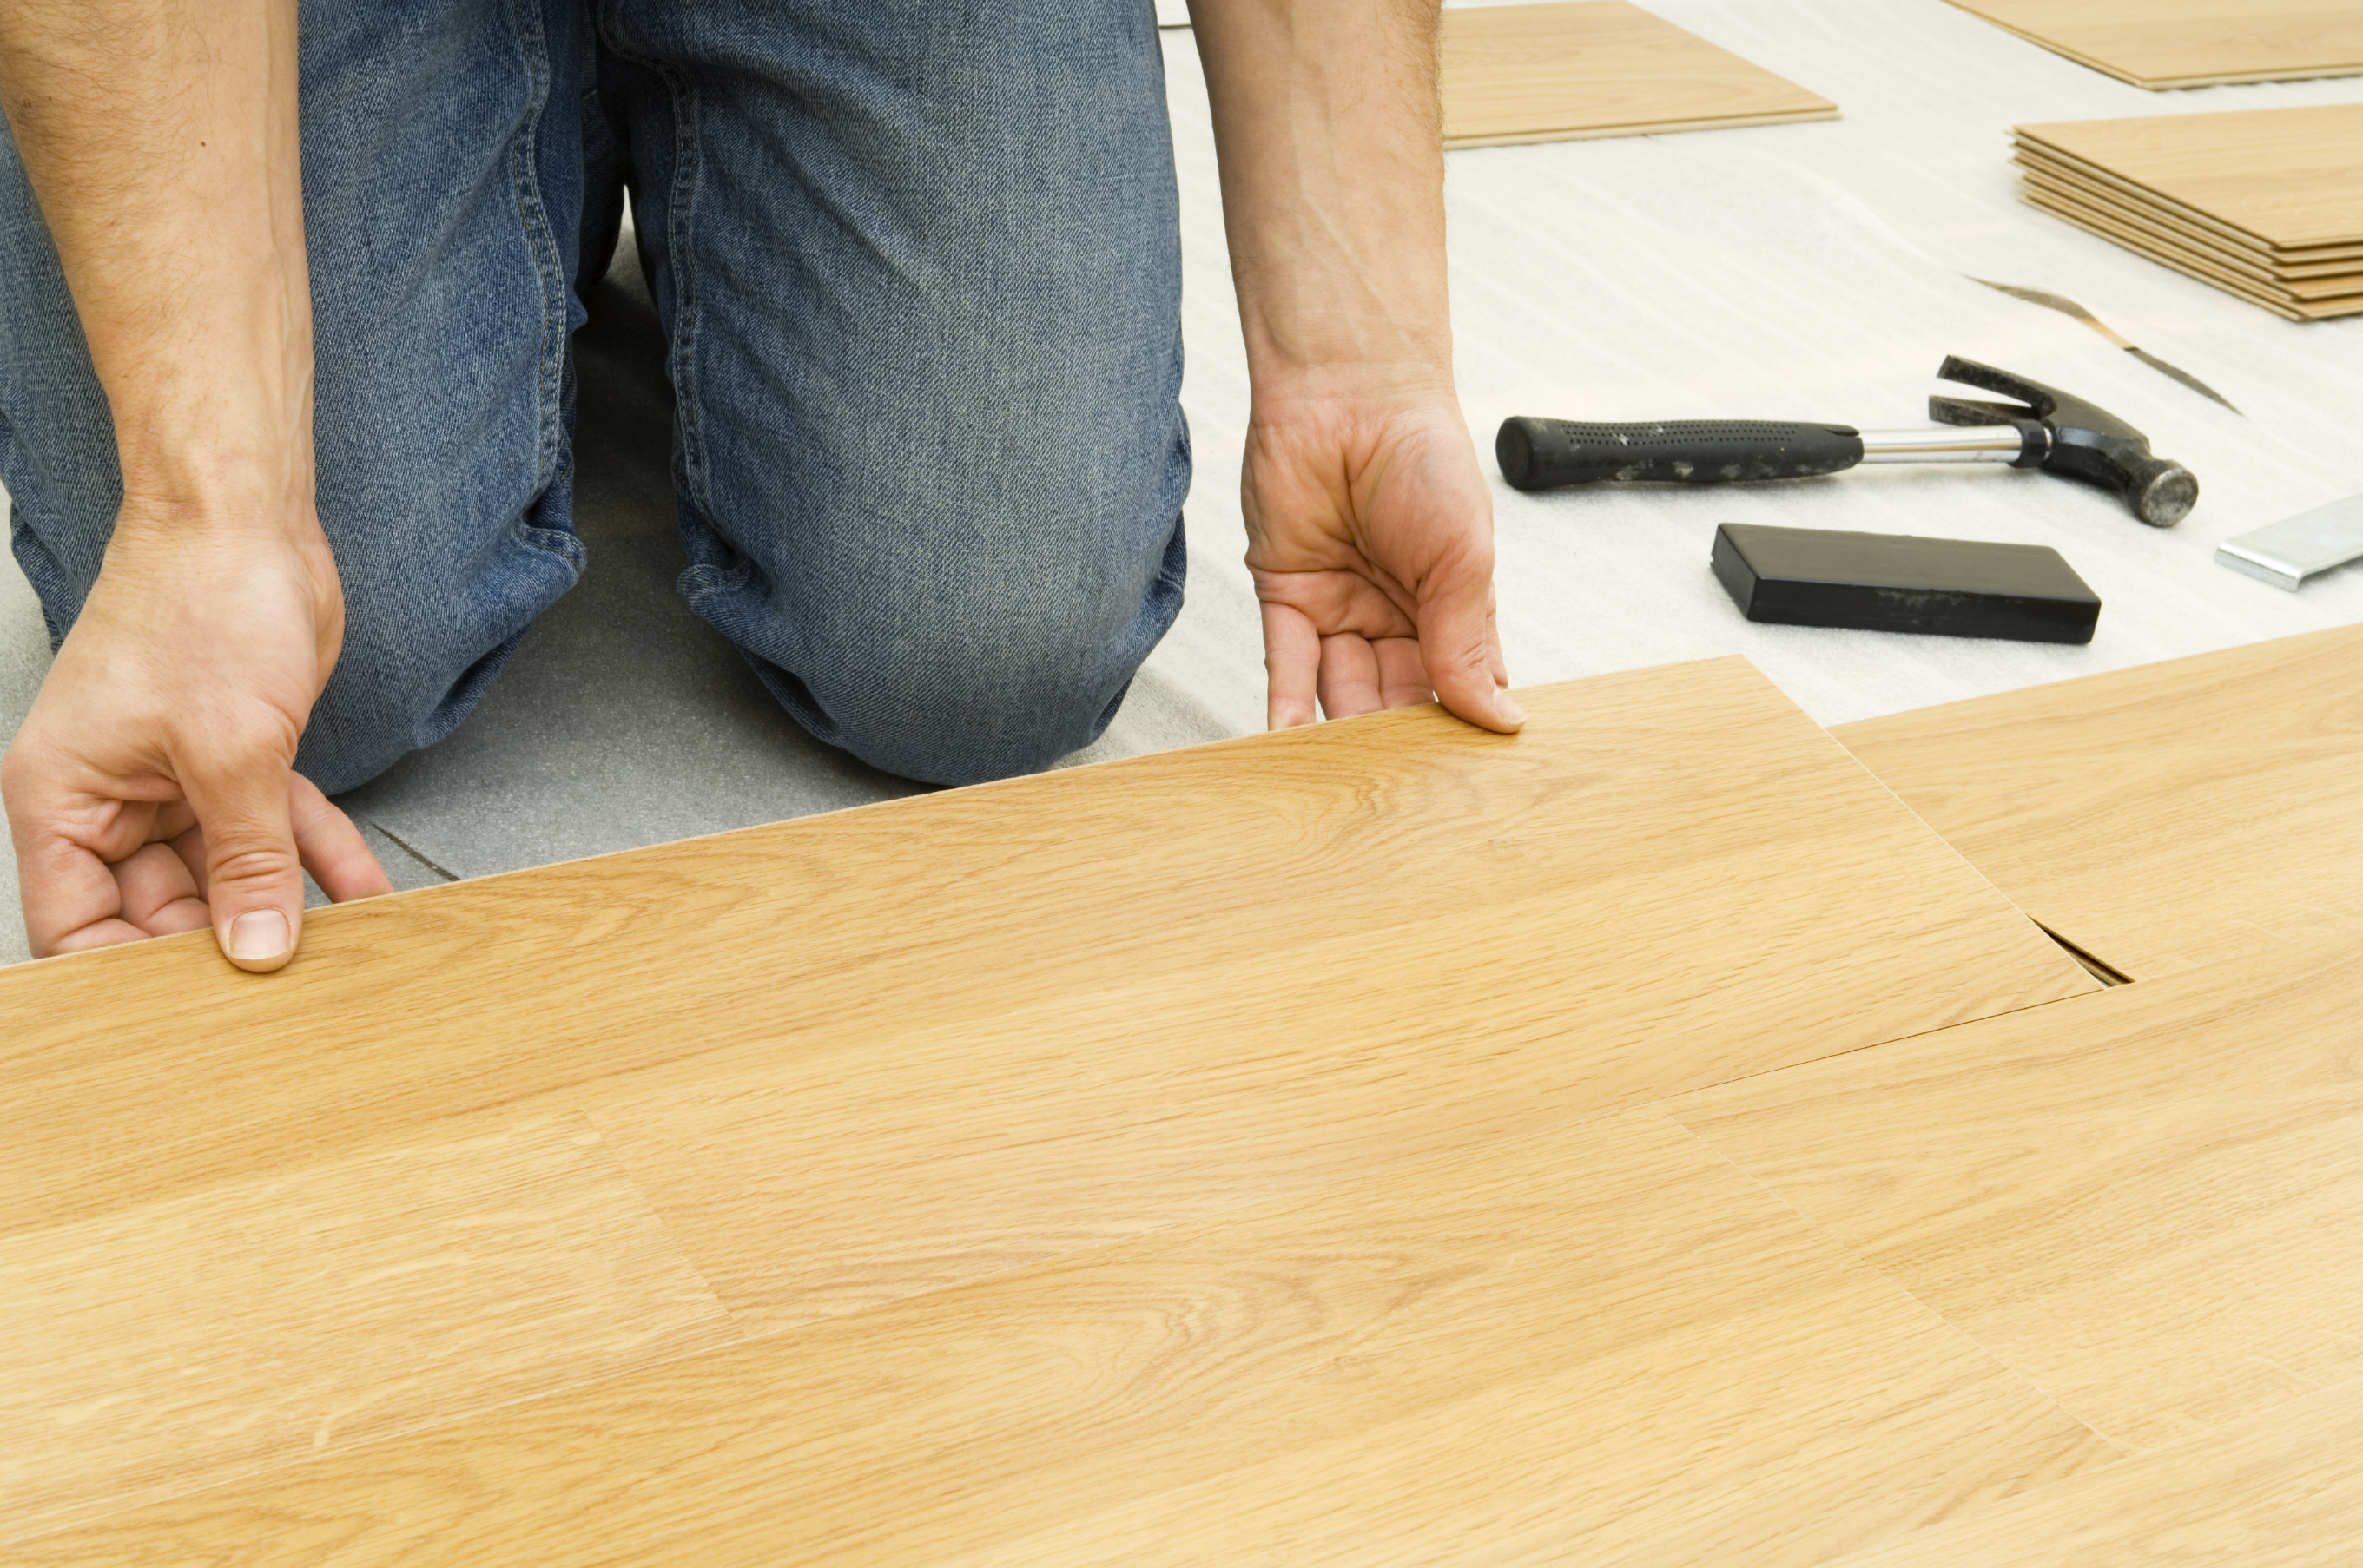 Lumber Liquidators Flooring Lawsuits, How Much Does Lumber Liquidators Charge To Install Laminate Flooring